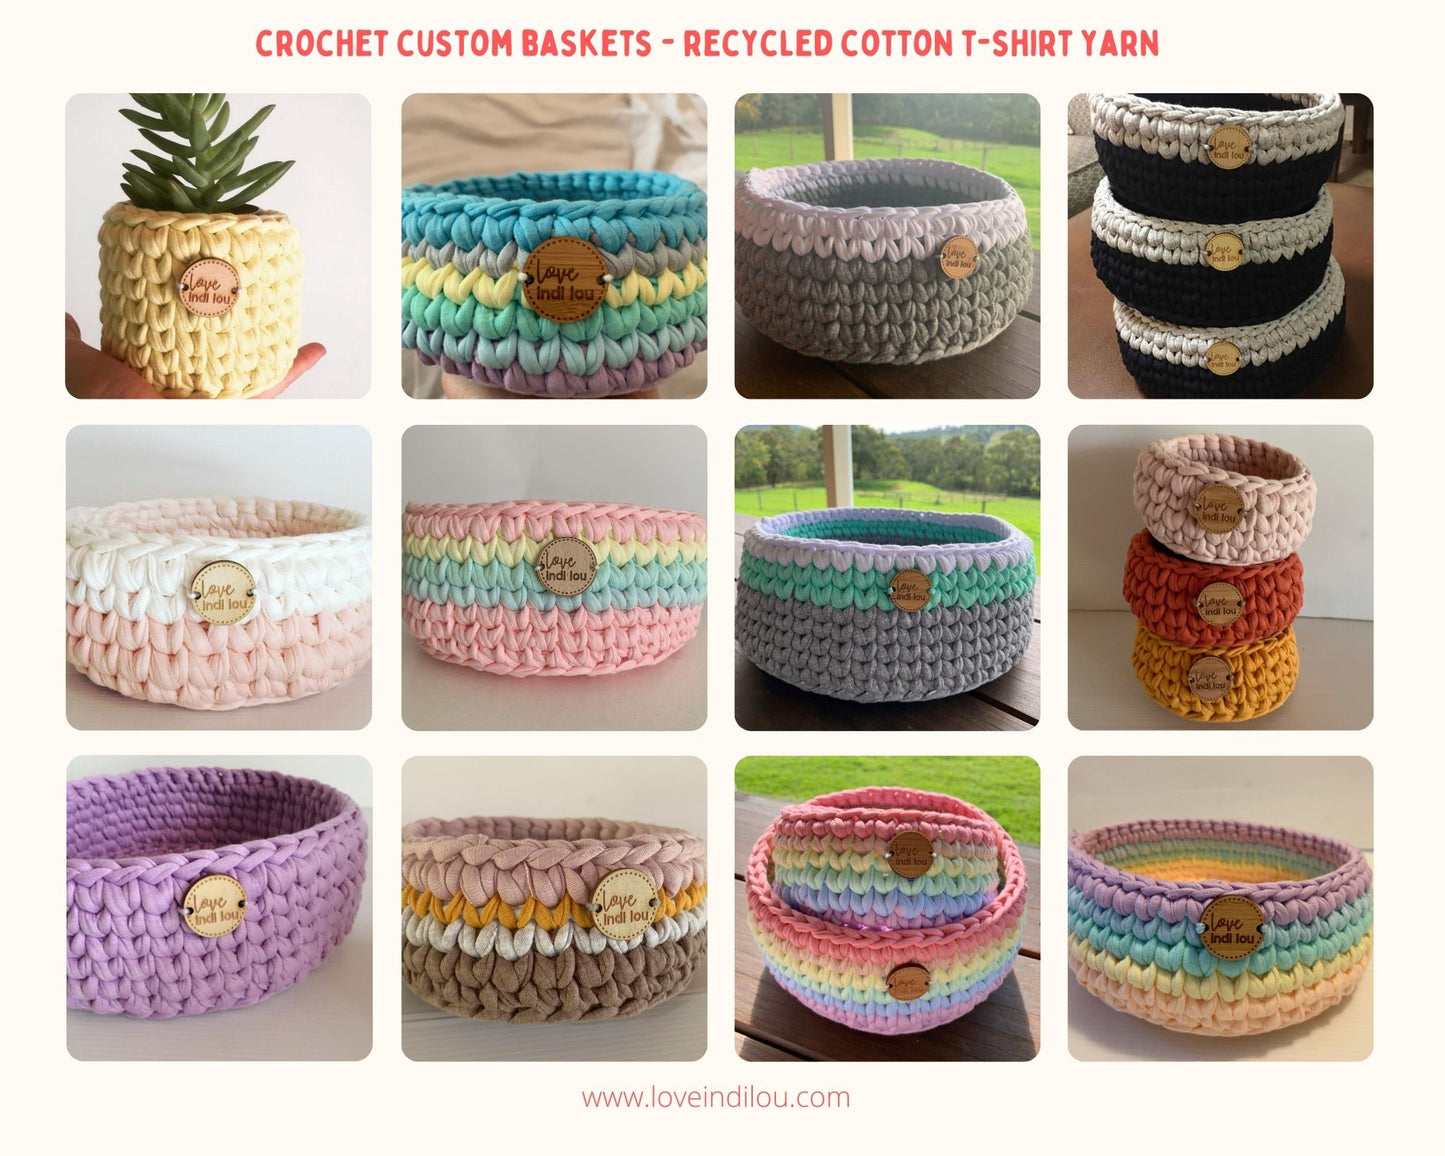 Crochet Storage Basket - Pastel Blue